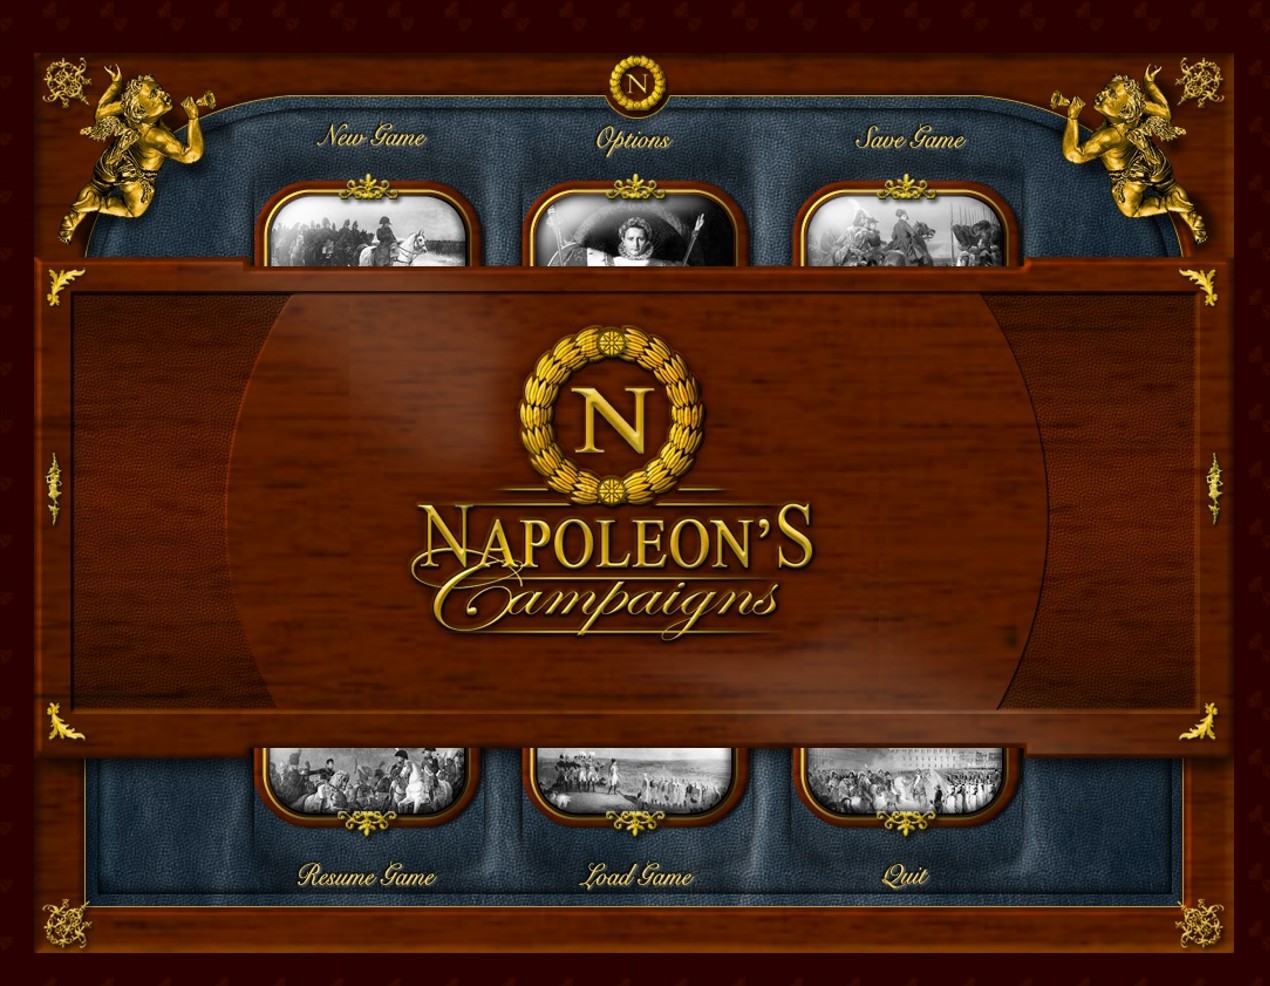 Napoleons sign.jpg